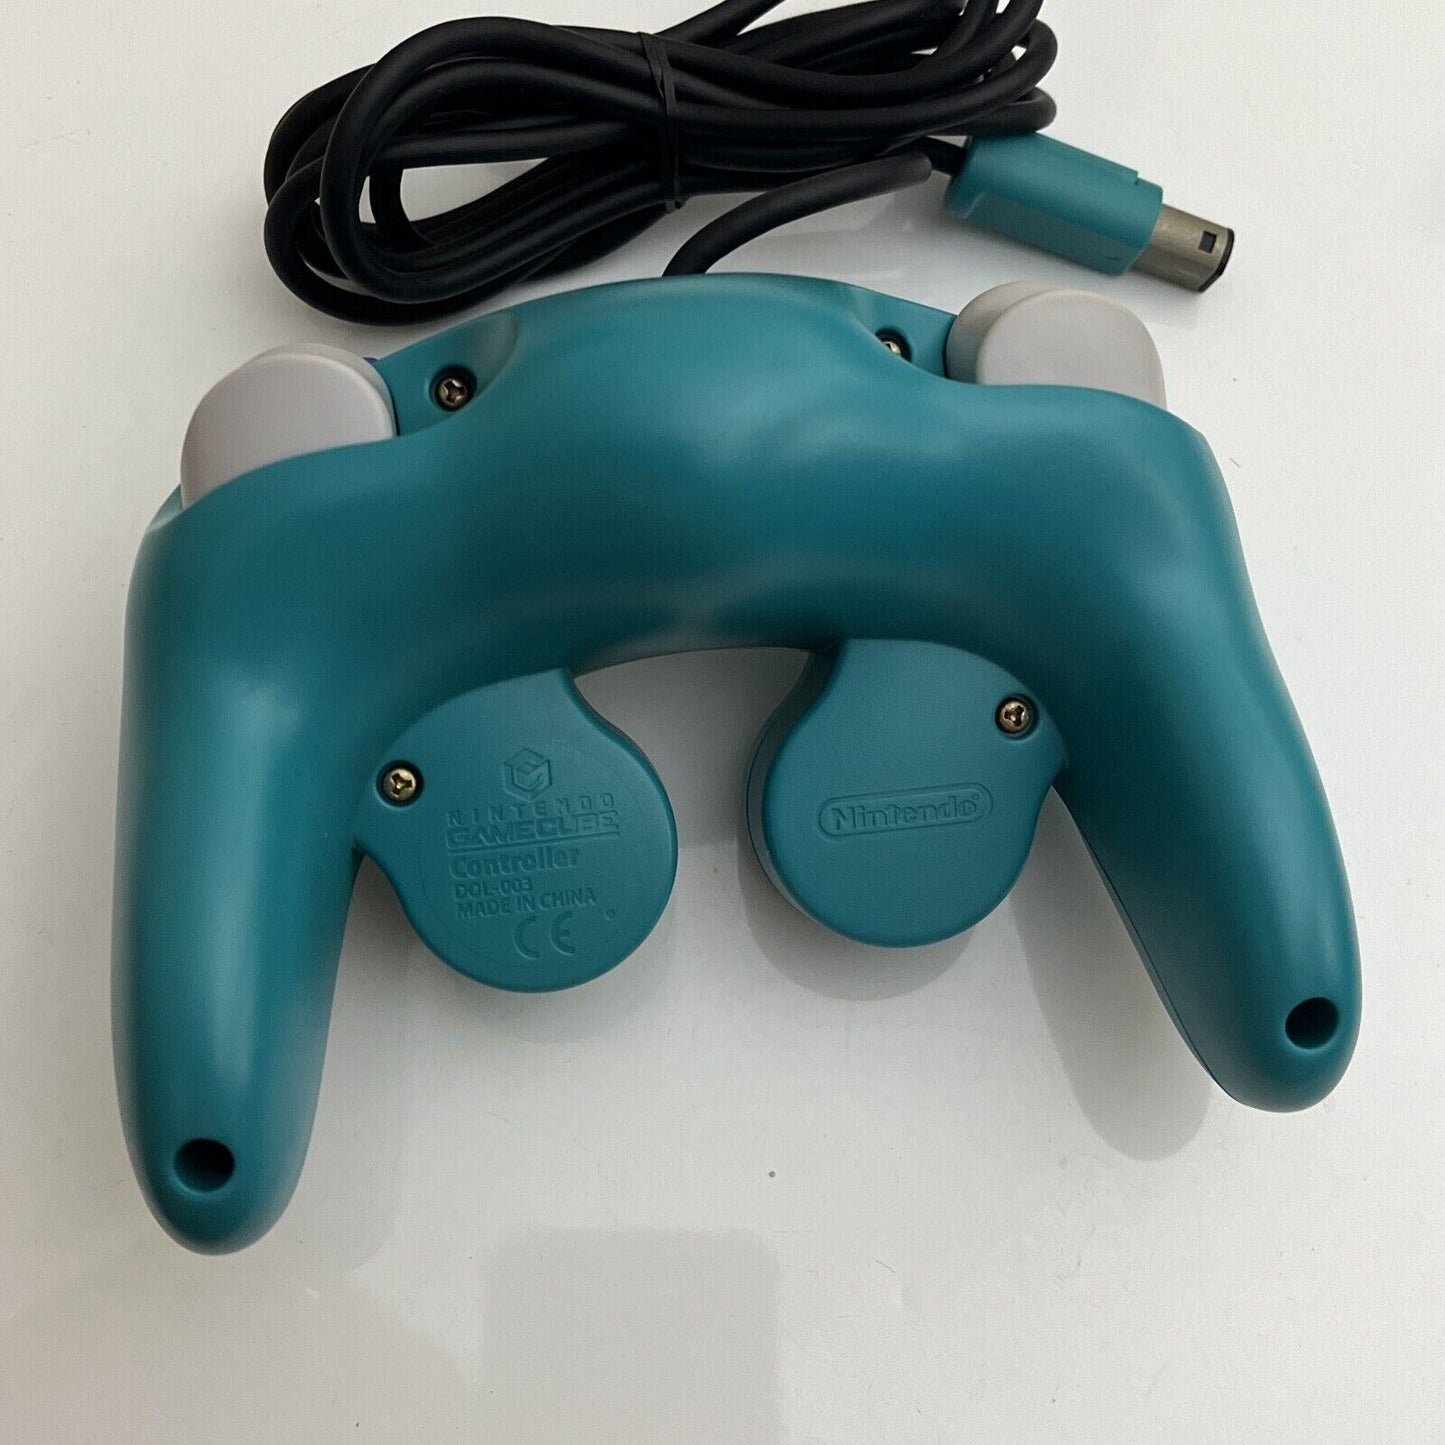 Official Genuine Nintendo GameCube Controller Blue Emerald Turquoise